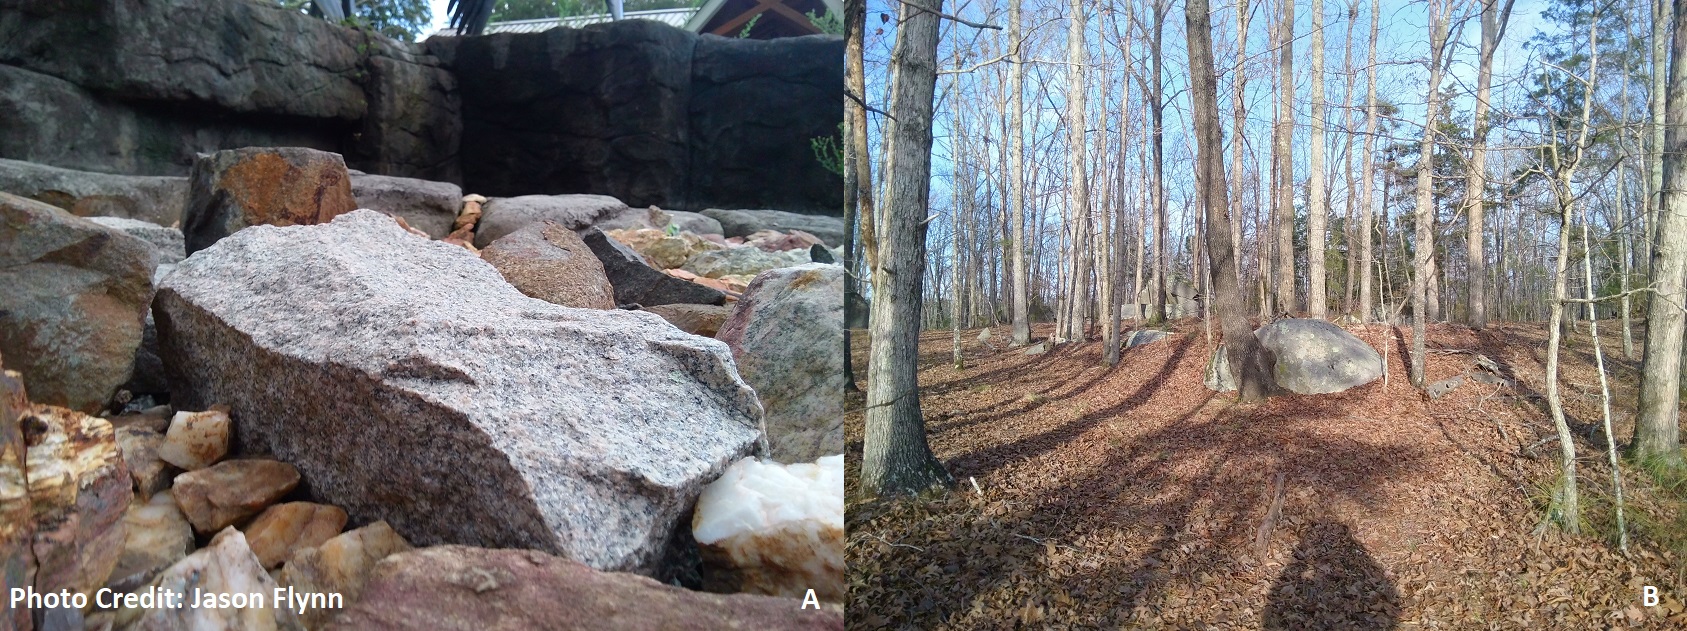 A) The South Carolina state rock on display – Winnsboro Blue Granite from the Carolina Slate Belt B) Winnsboro Blue Granite outcropping in nature